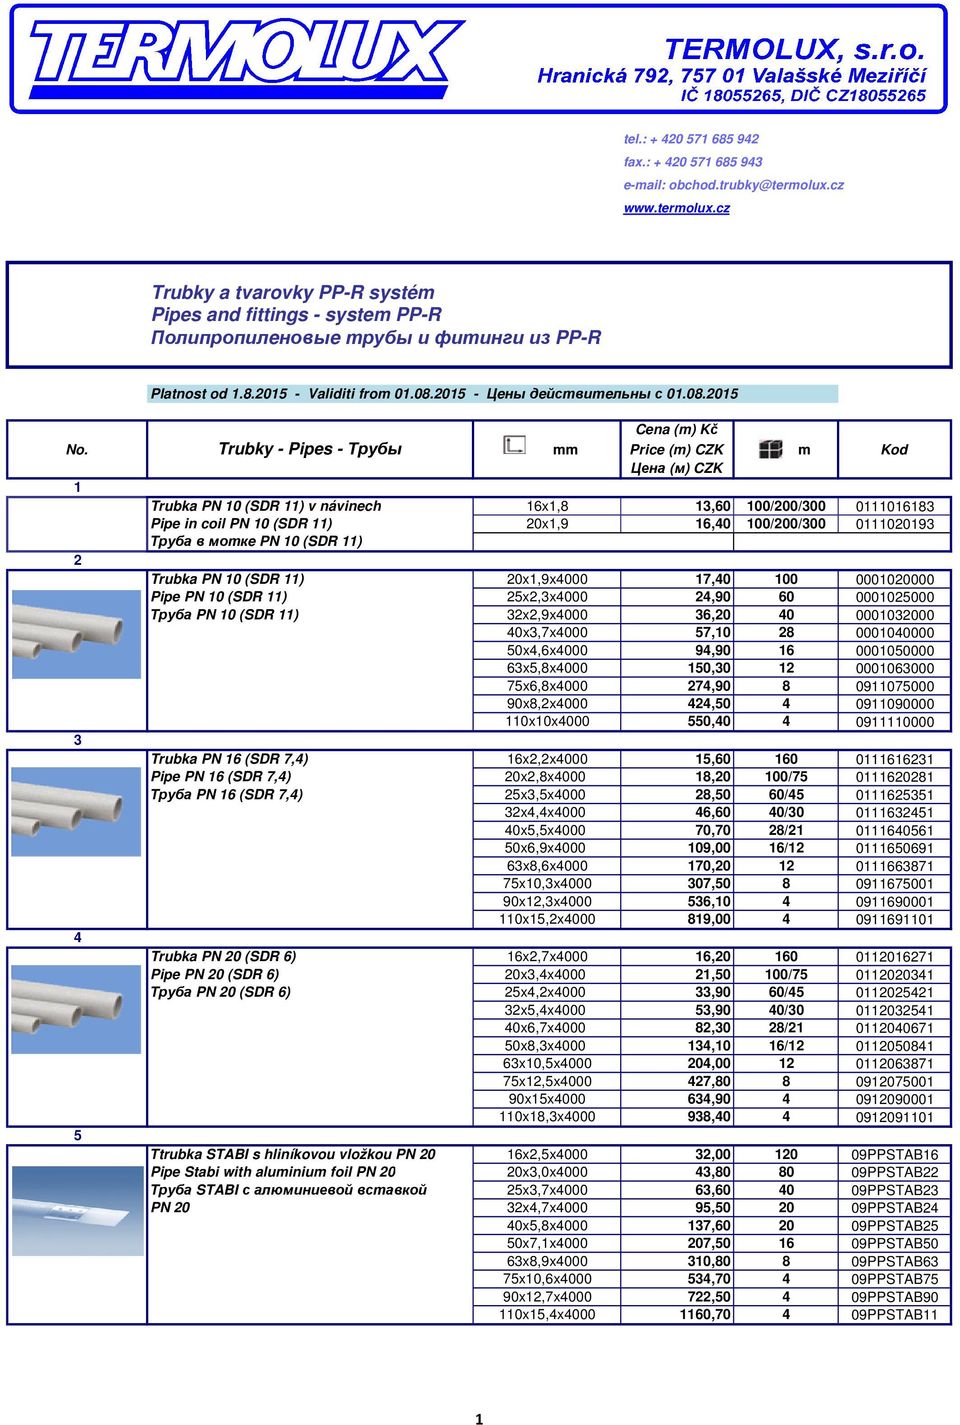 Trubky - Pipes - Трубы mm Price (m) CZK m Kod 1 Trubka PN 10 (SDR 11) v návinech 16x1,8 13,60 100/200/300 0111016183 Pipe in coil PN 10 (SDR 11) 20x1,9 16,40 100/200/300 0111020193 Труба в моткe PN